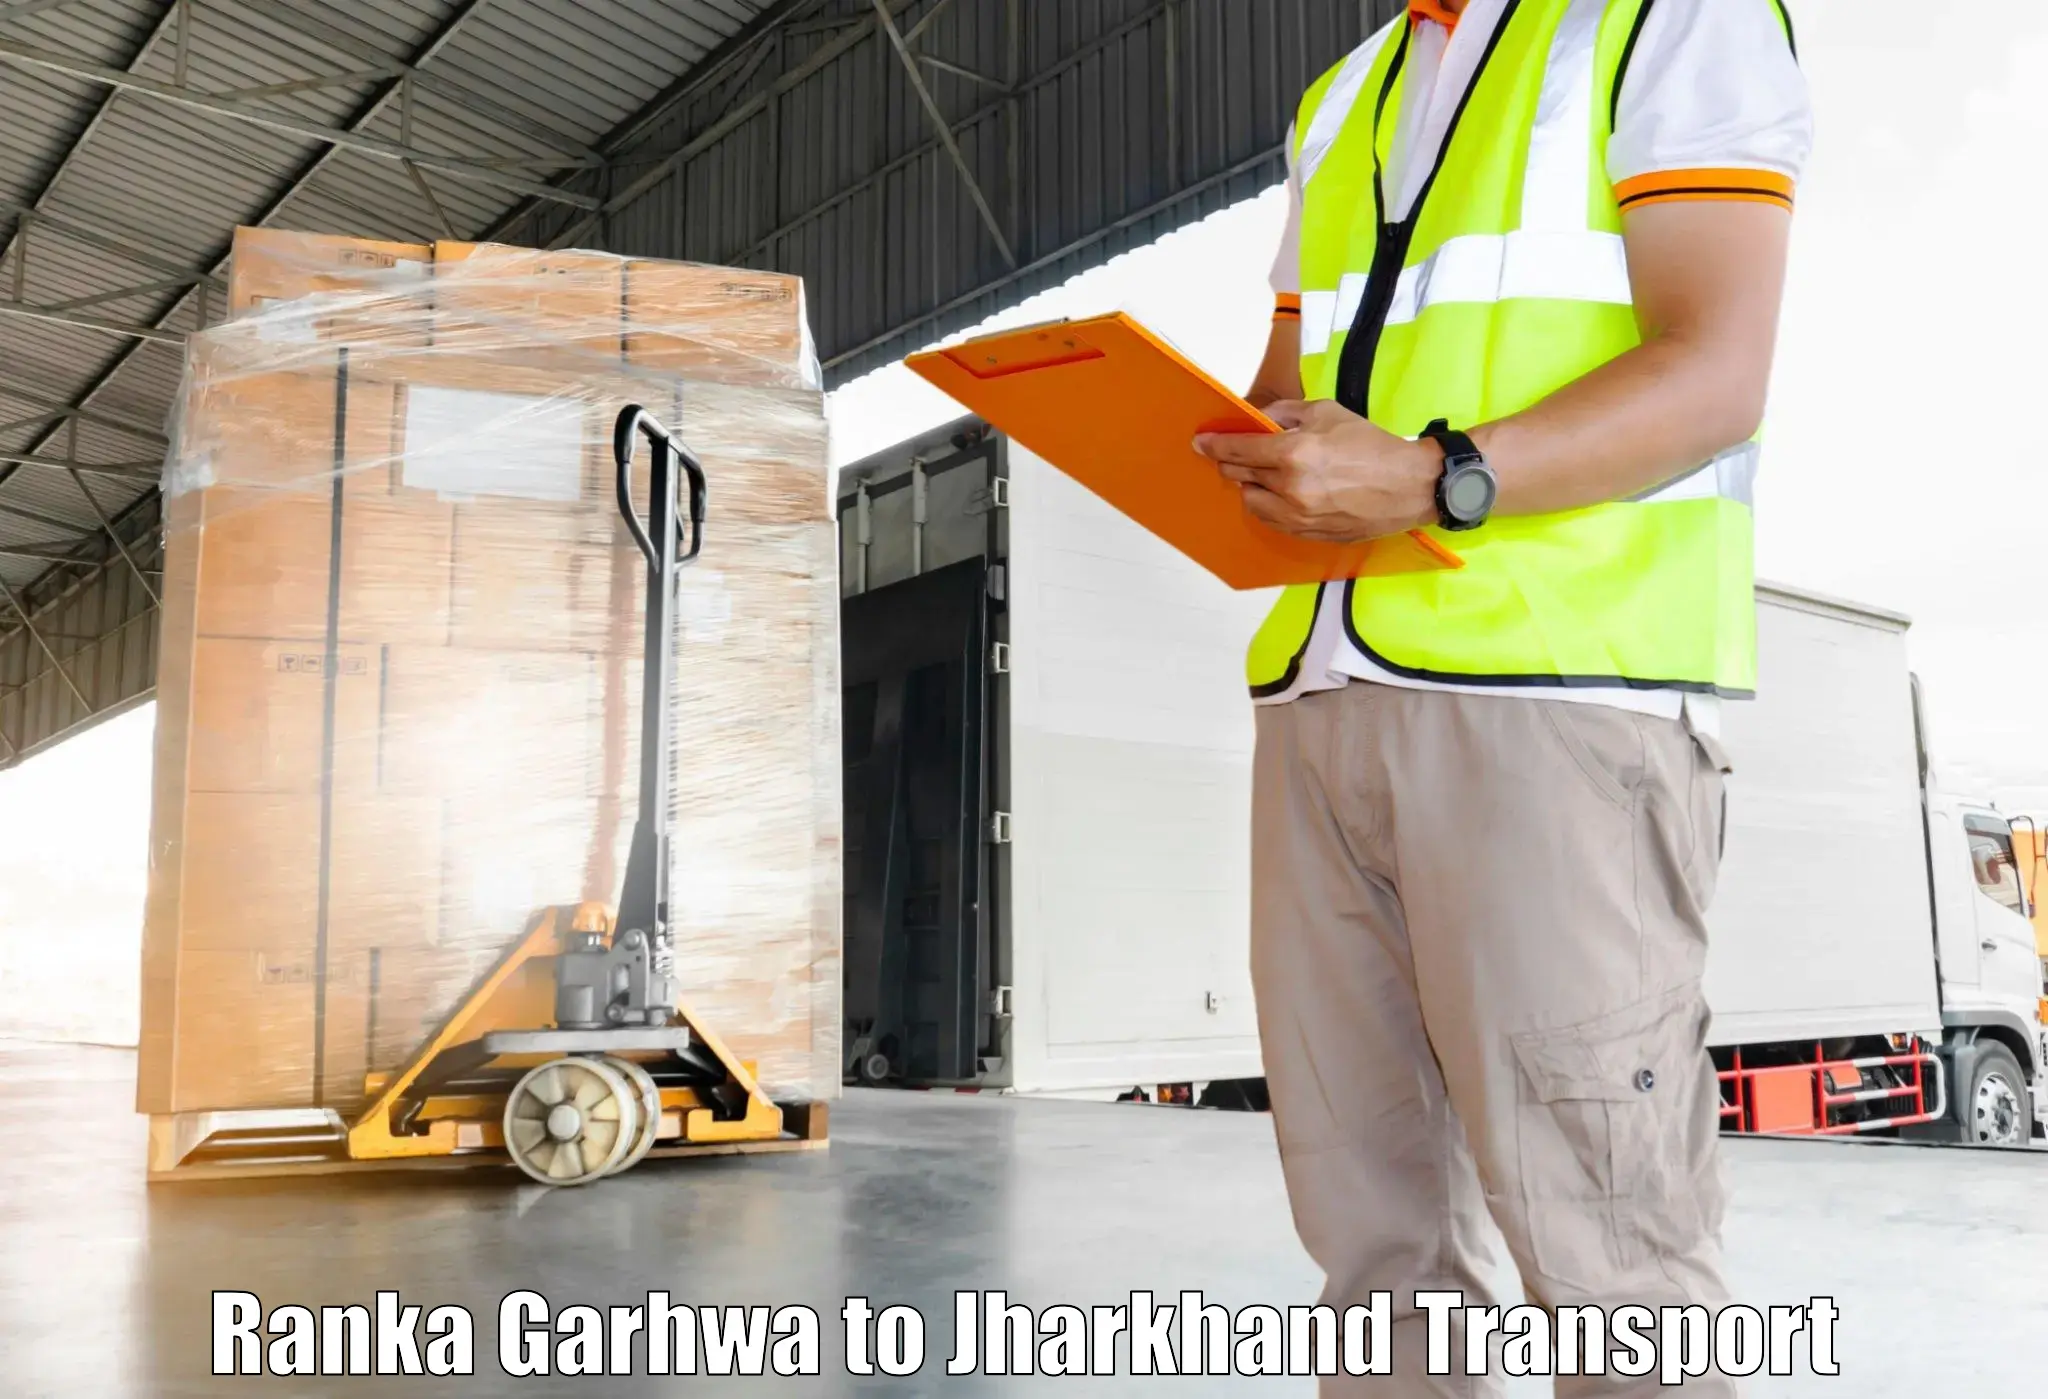 Land transport services in Ranka Garhwa to Dhanbad